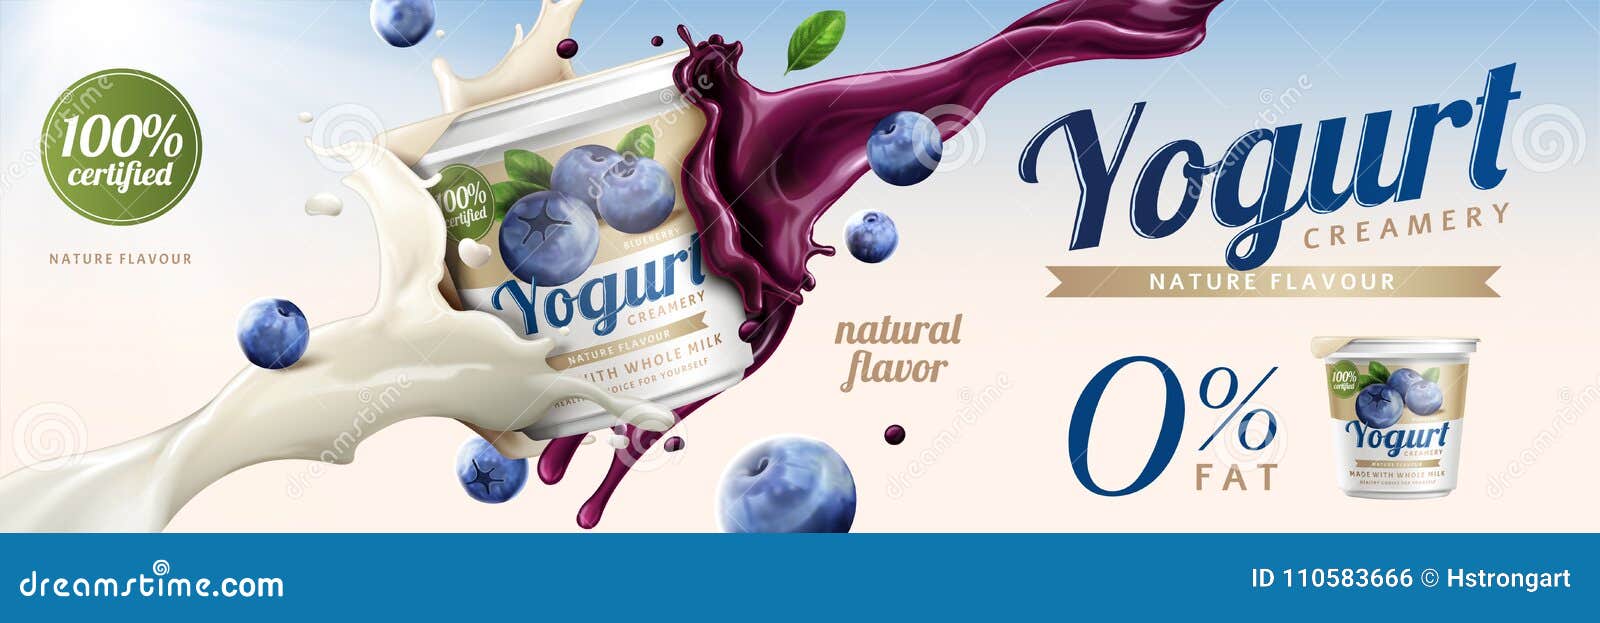 blueberry yogurt ads